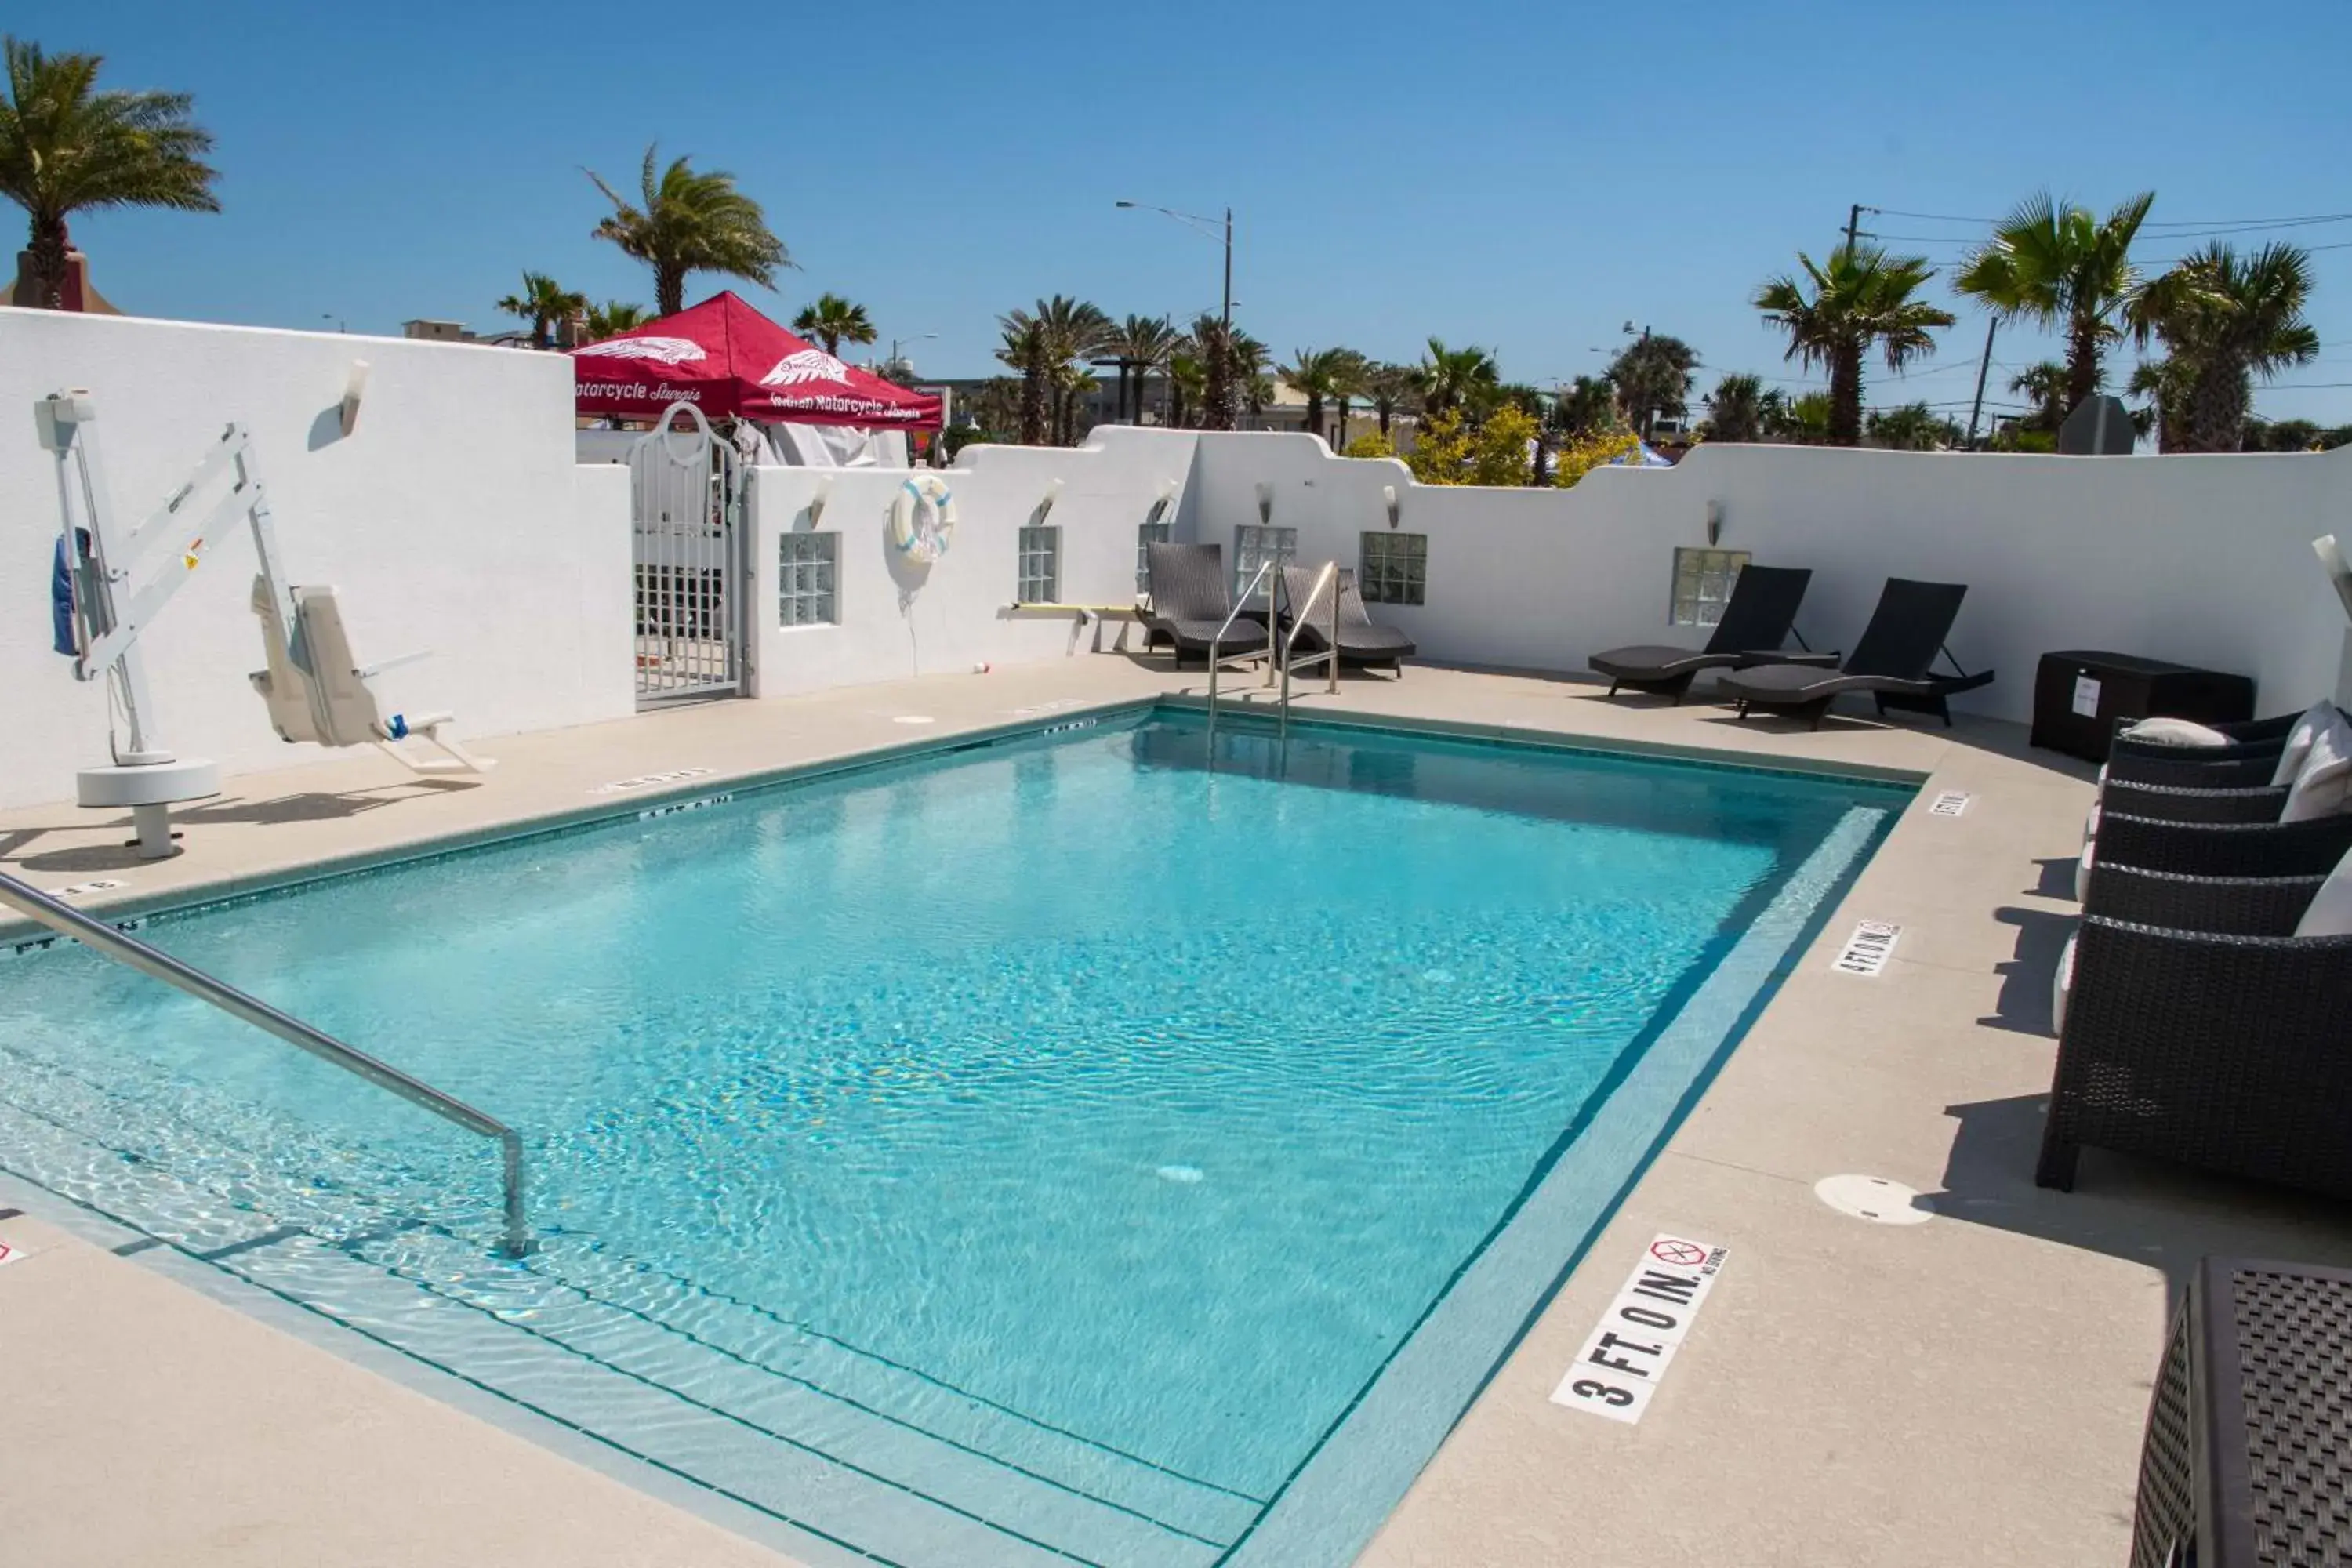 Swimming Pool in The Streamline Hotel - Daytona Beach